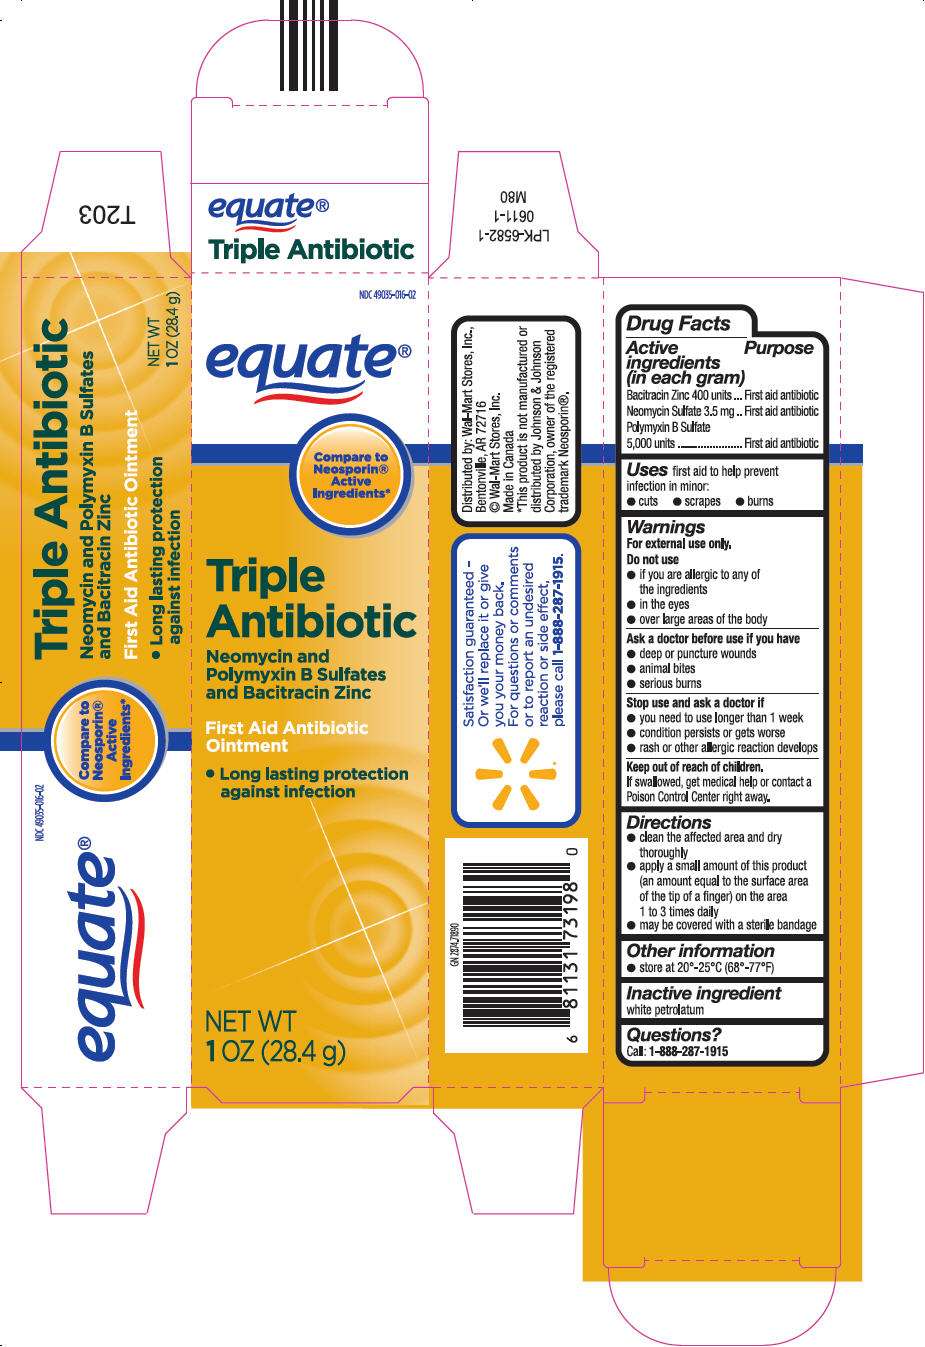 Triple Antibiotic